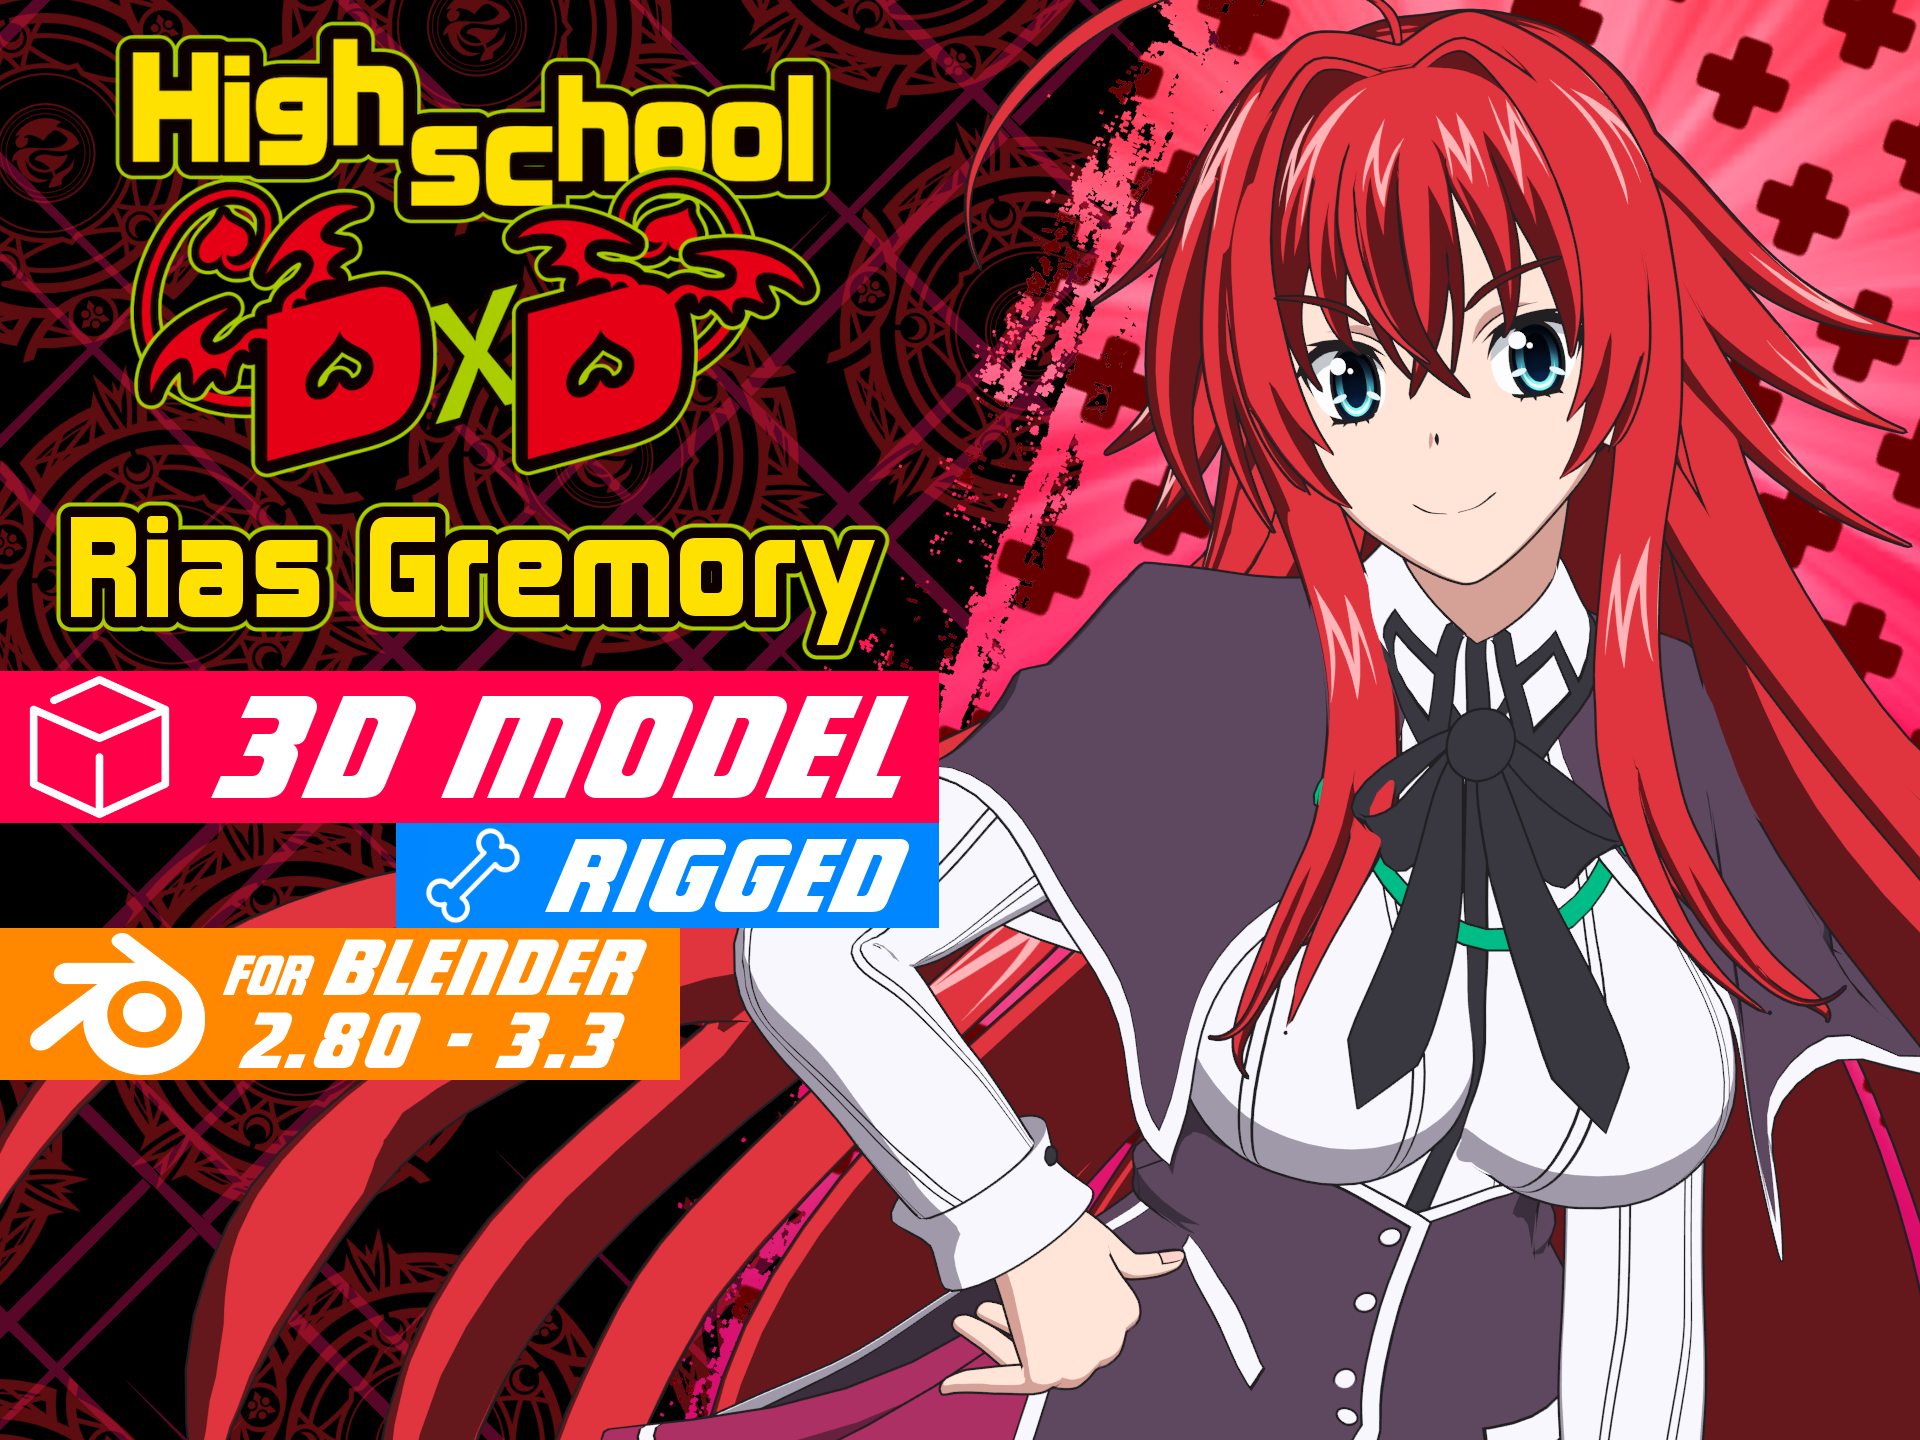 Highschool DXD Anime Graphic · Creative Fabrica